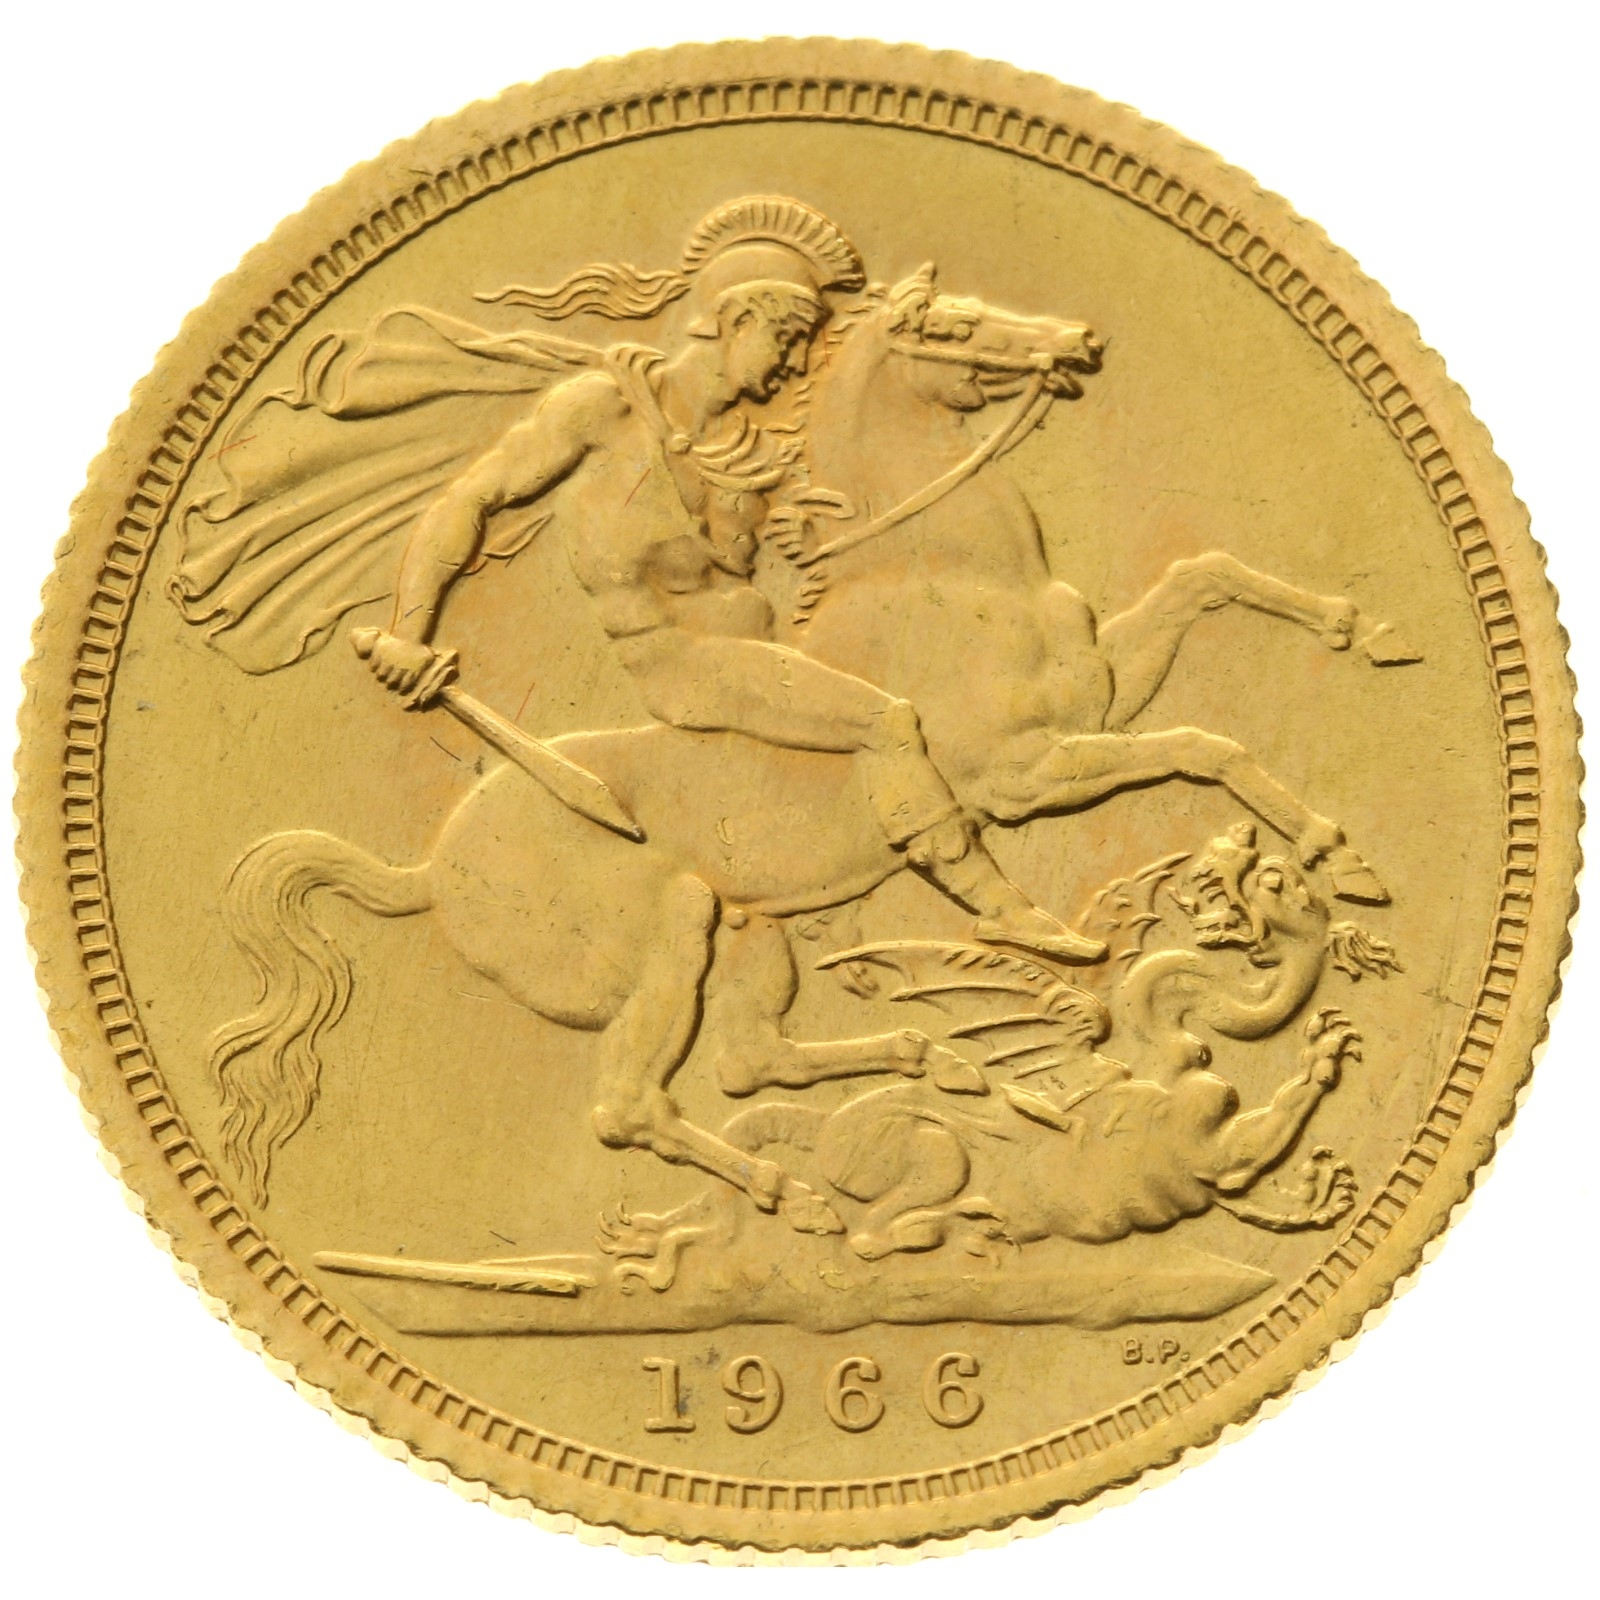 United Kingdom - 1 Sovereign - 1966 - Elizabeth II 